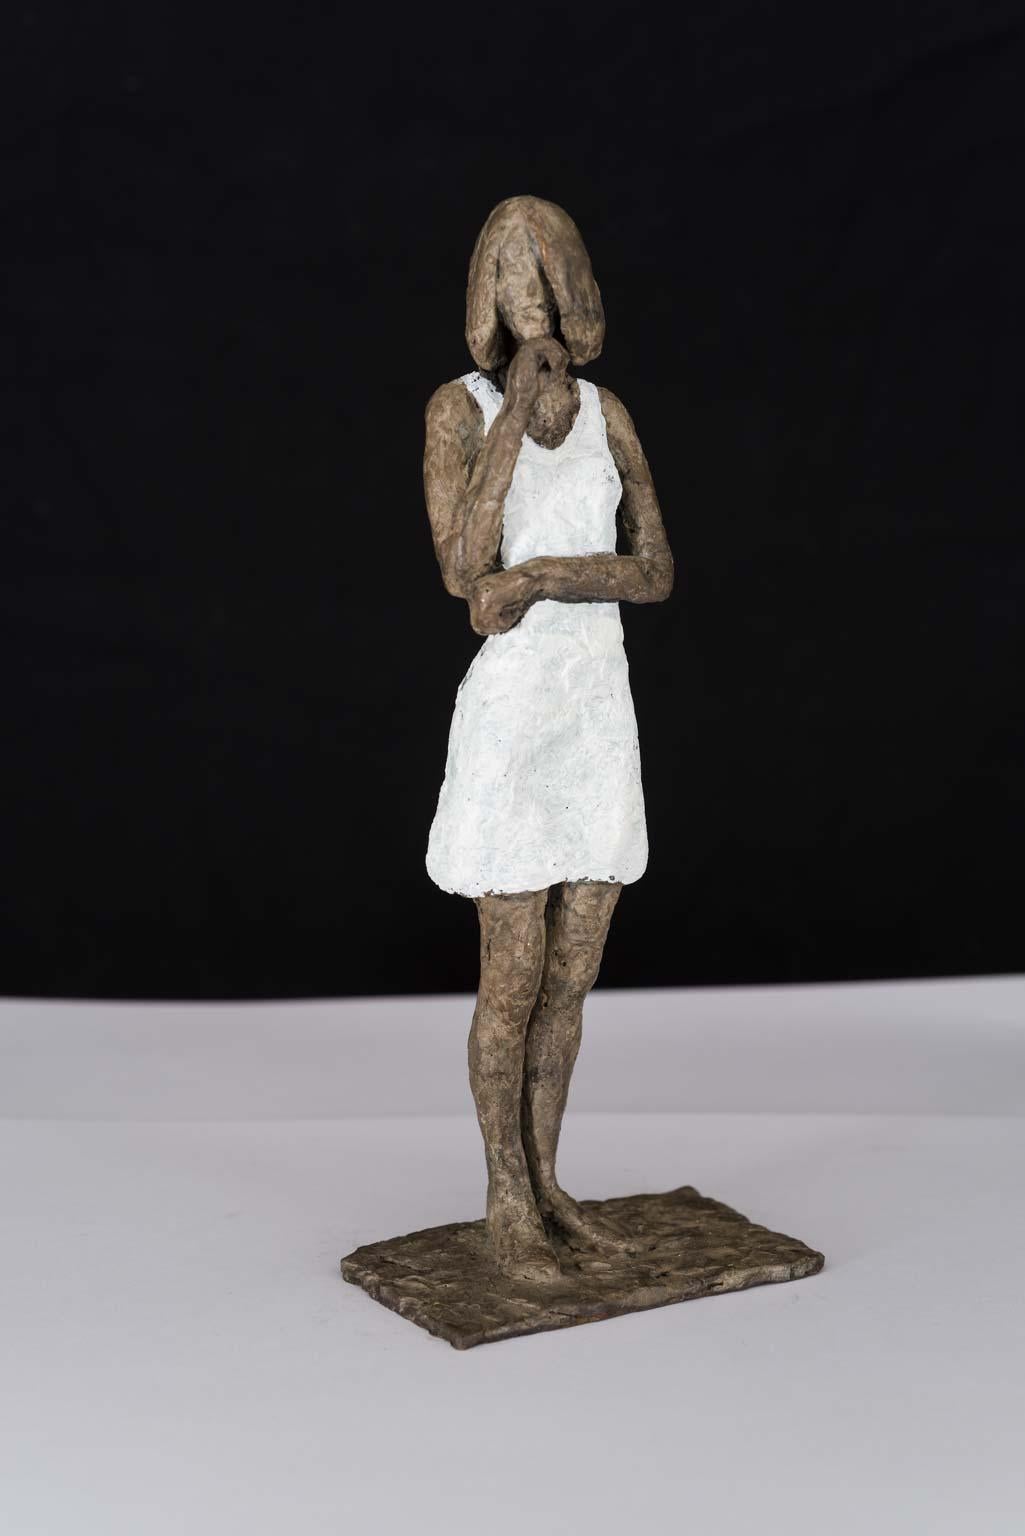 Susanne Kraisser Figurative Sculpture - Girl in Mini Dress - contemporary bronze sculpture, nude female with white dress